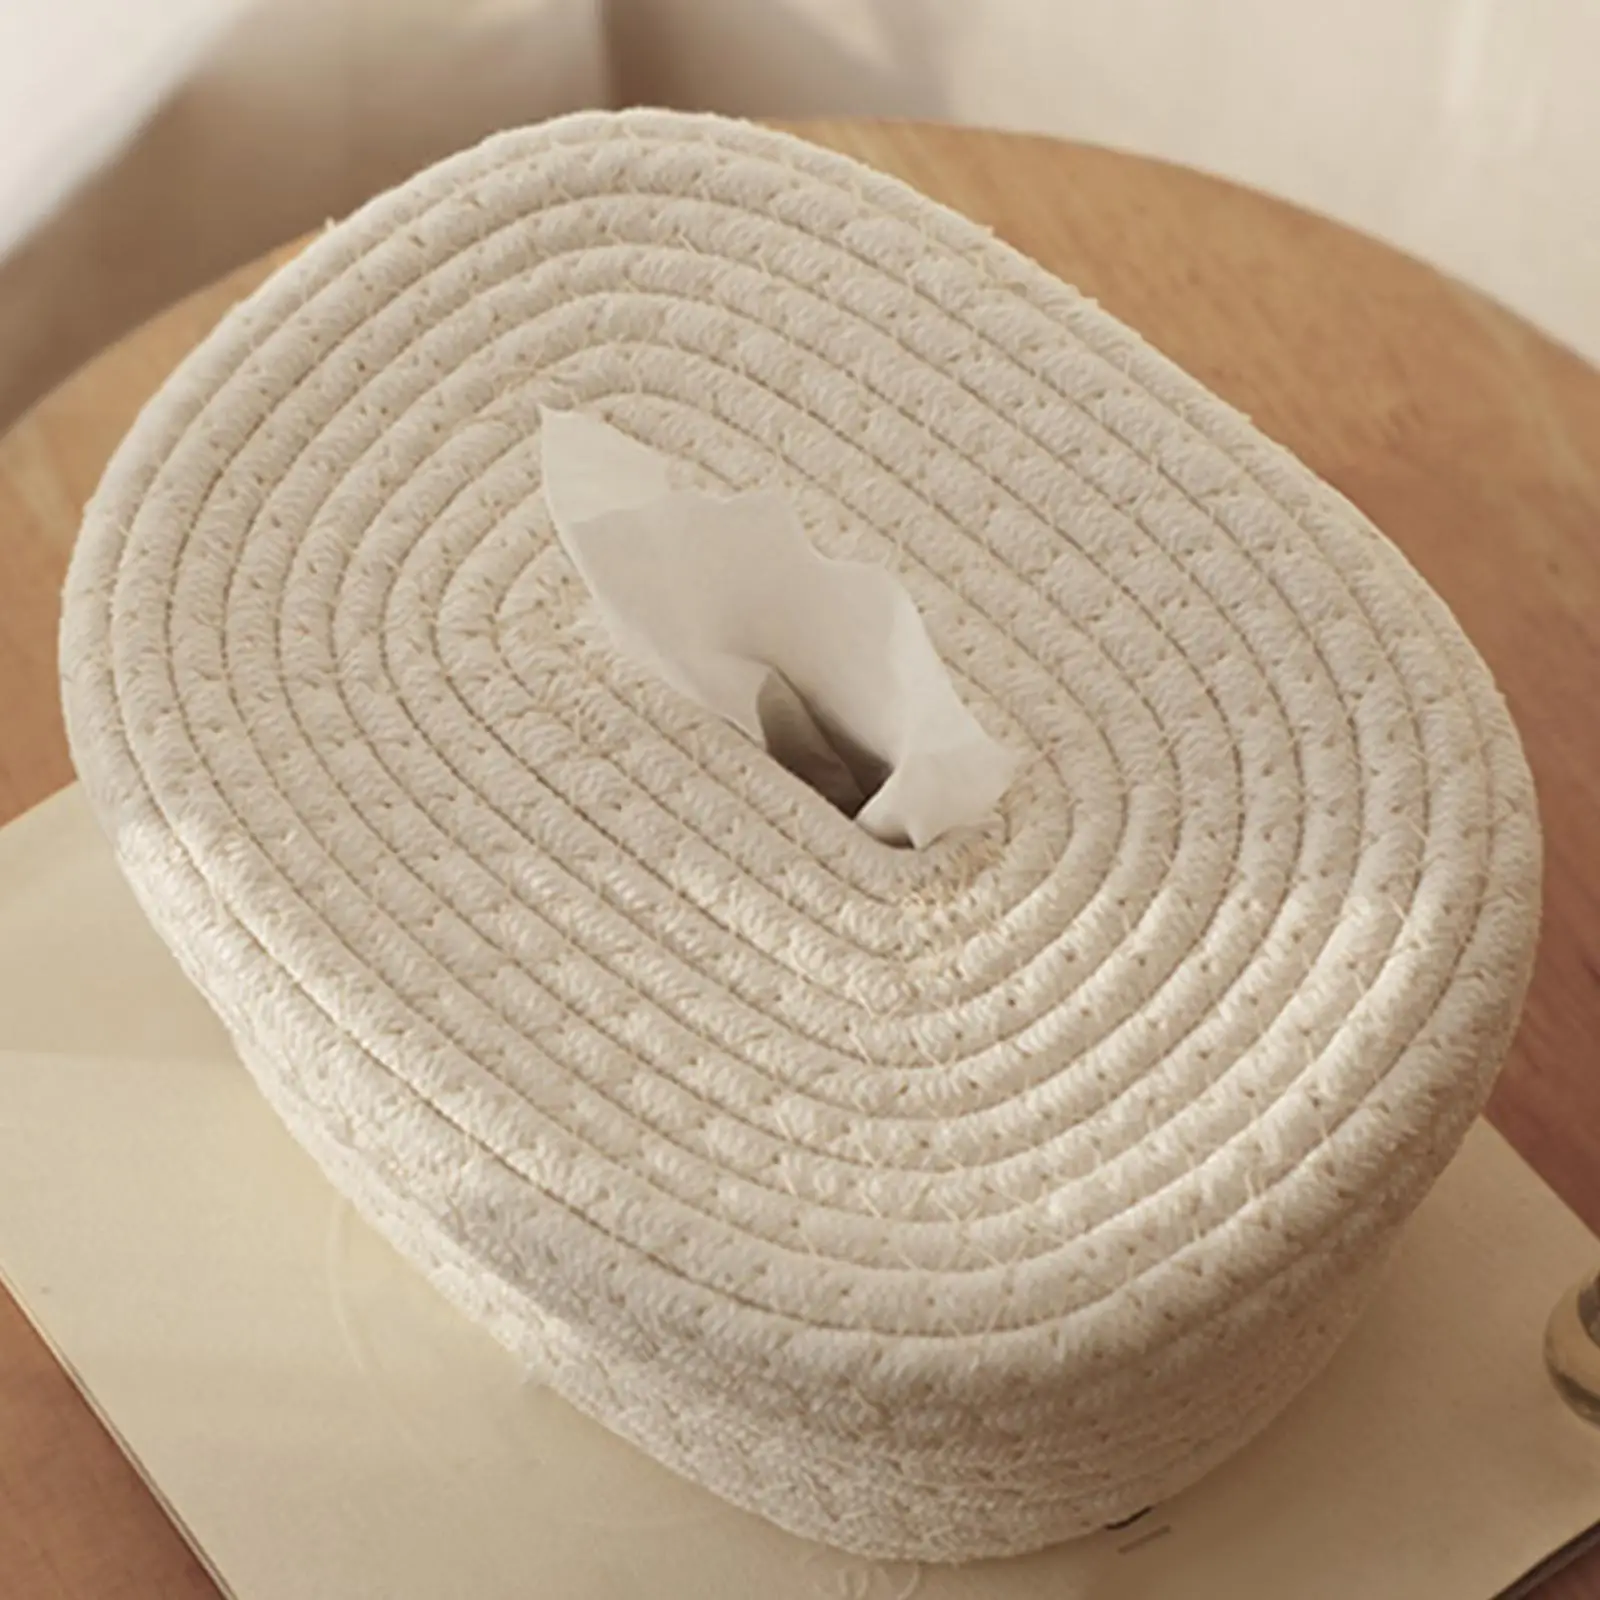  Rope Woven Napkin Tissues Holder Organizer for Decor Sundries box